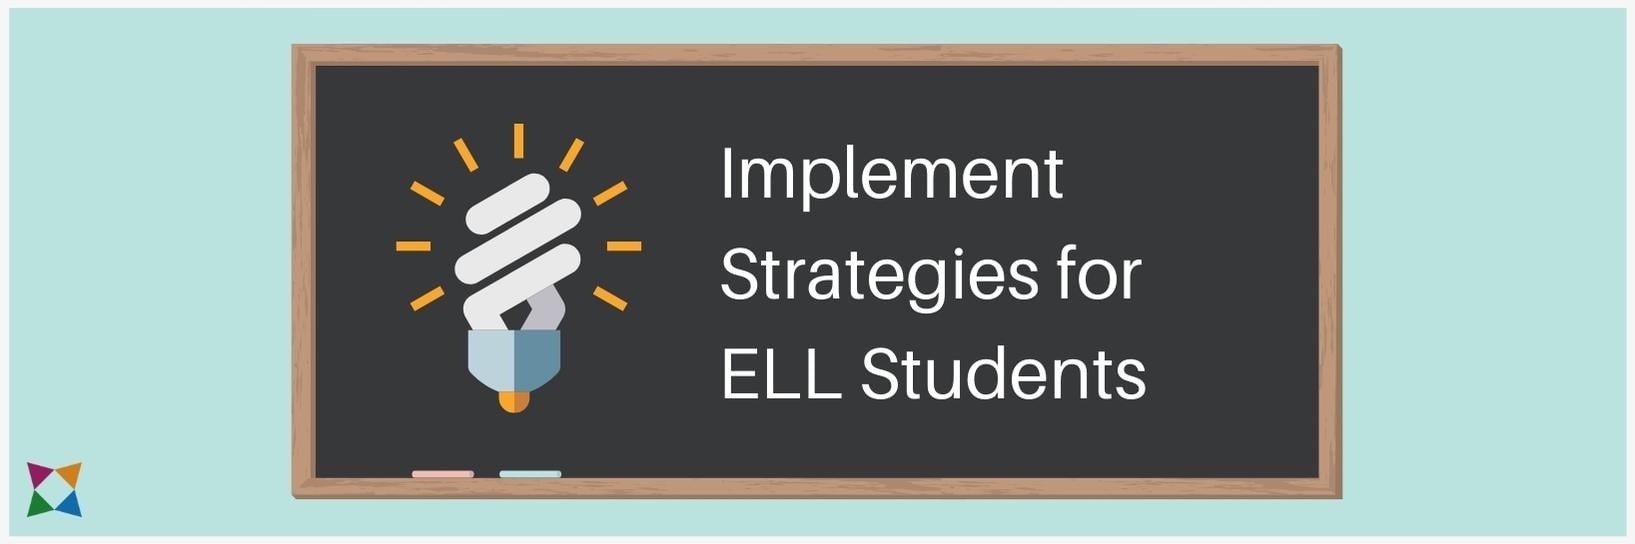 implement-strategies-ell-esl-students-cte